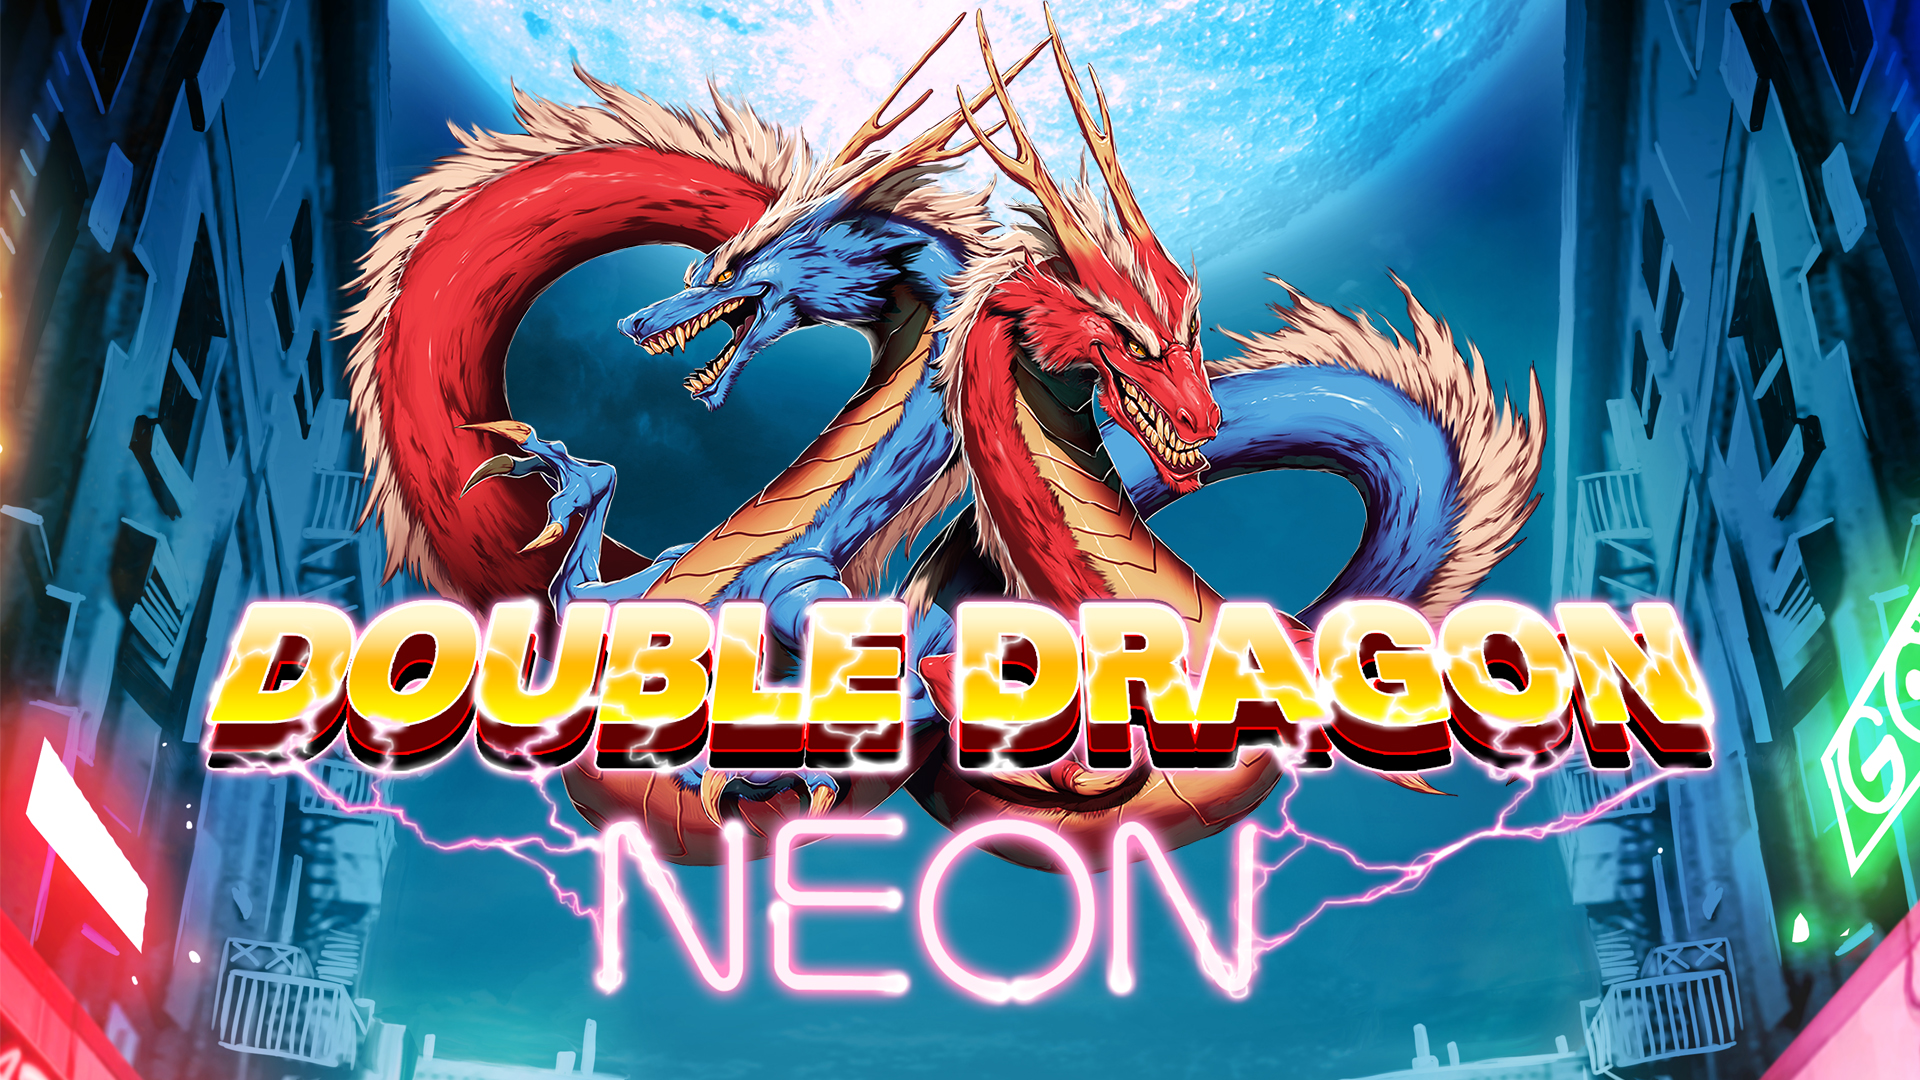 Buy Double Dragon Neon